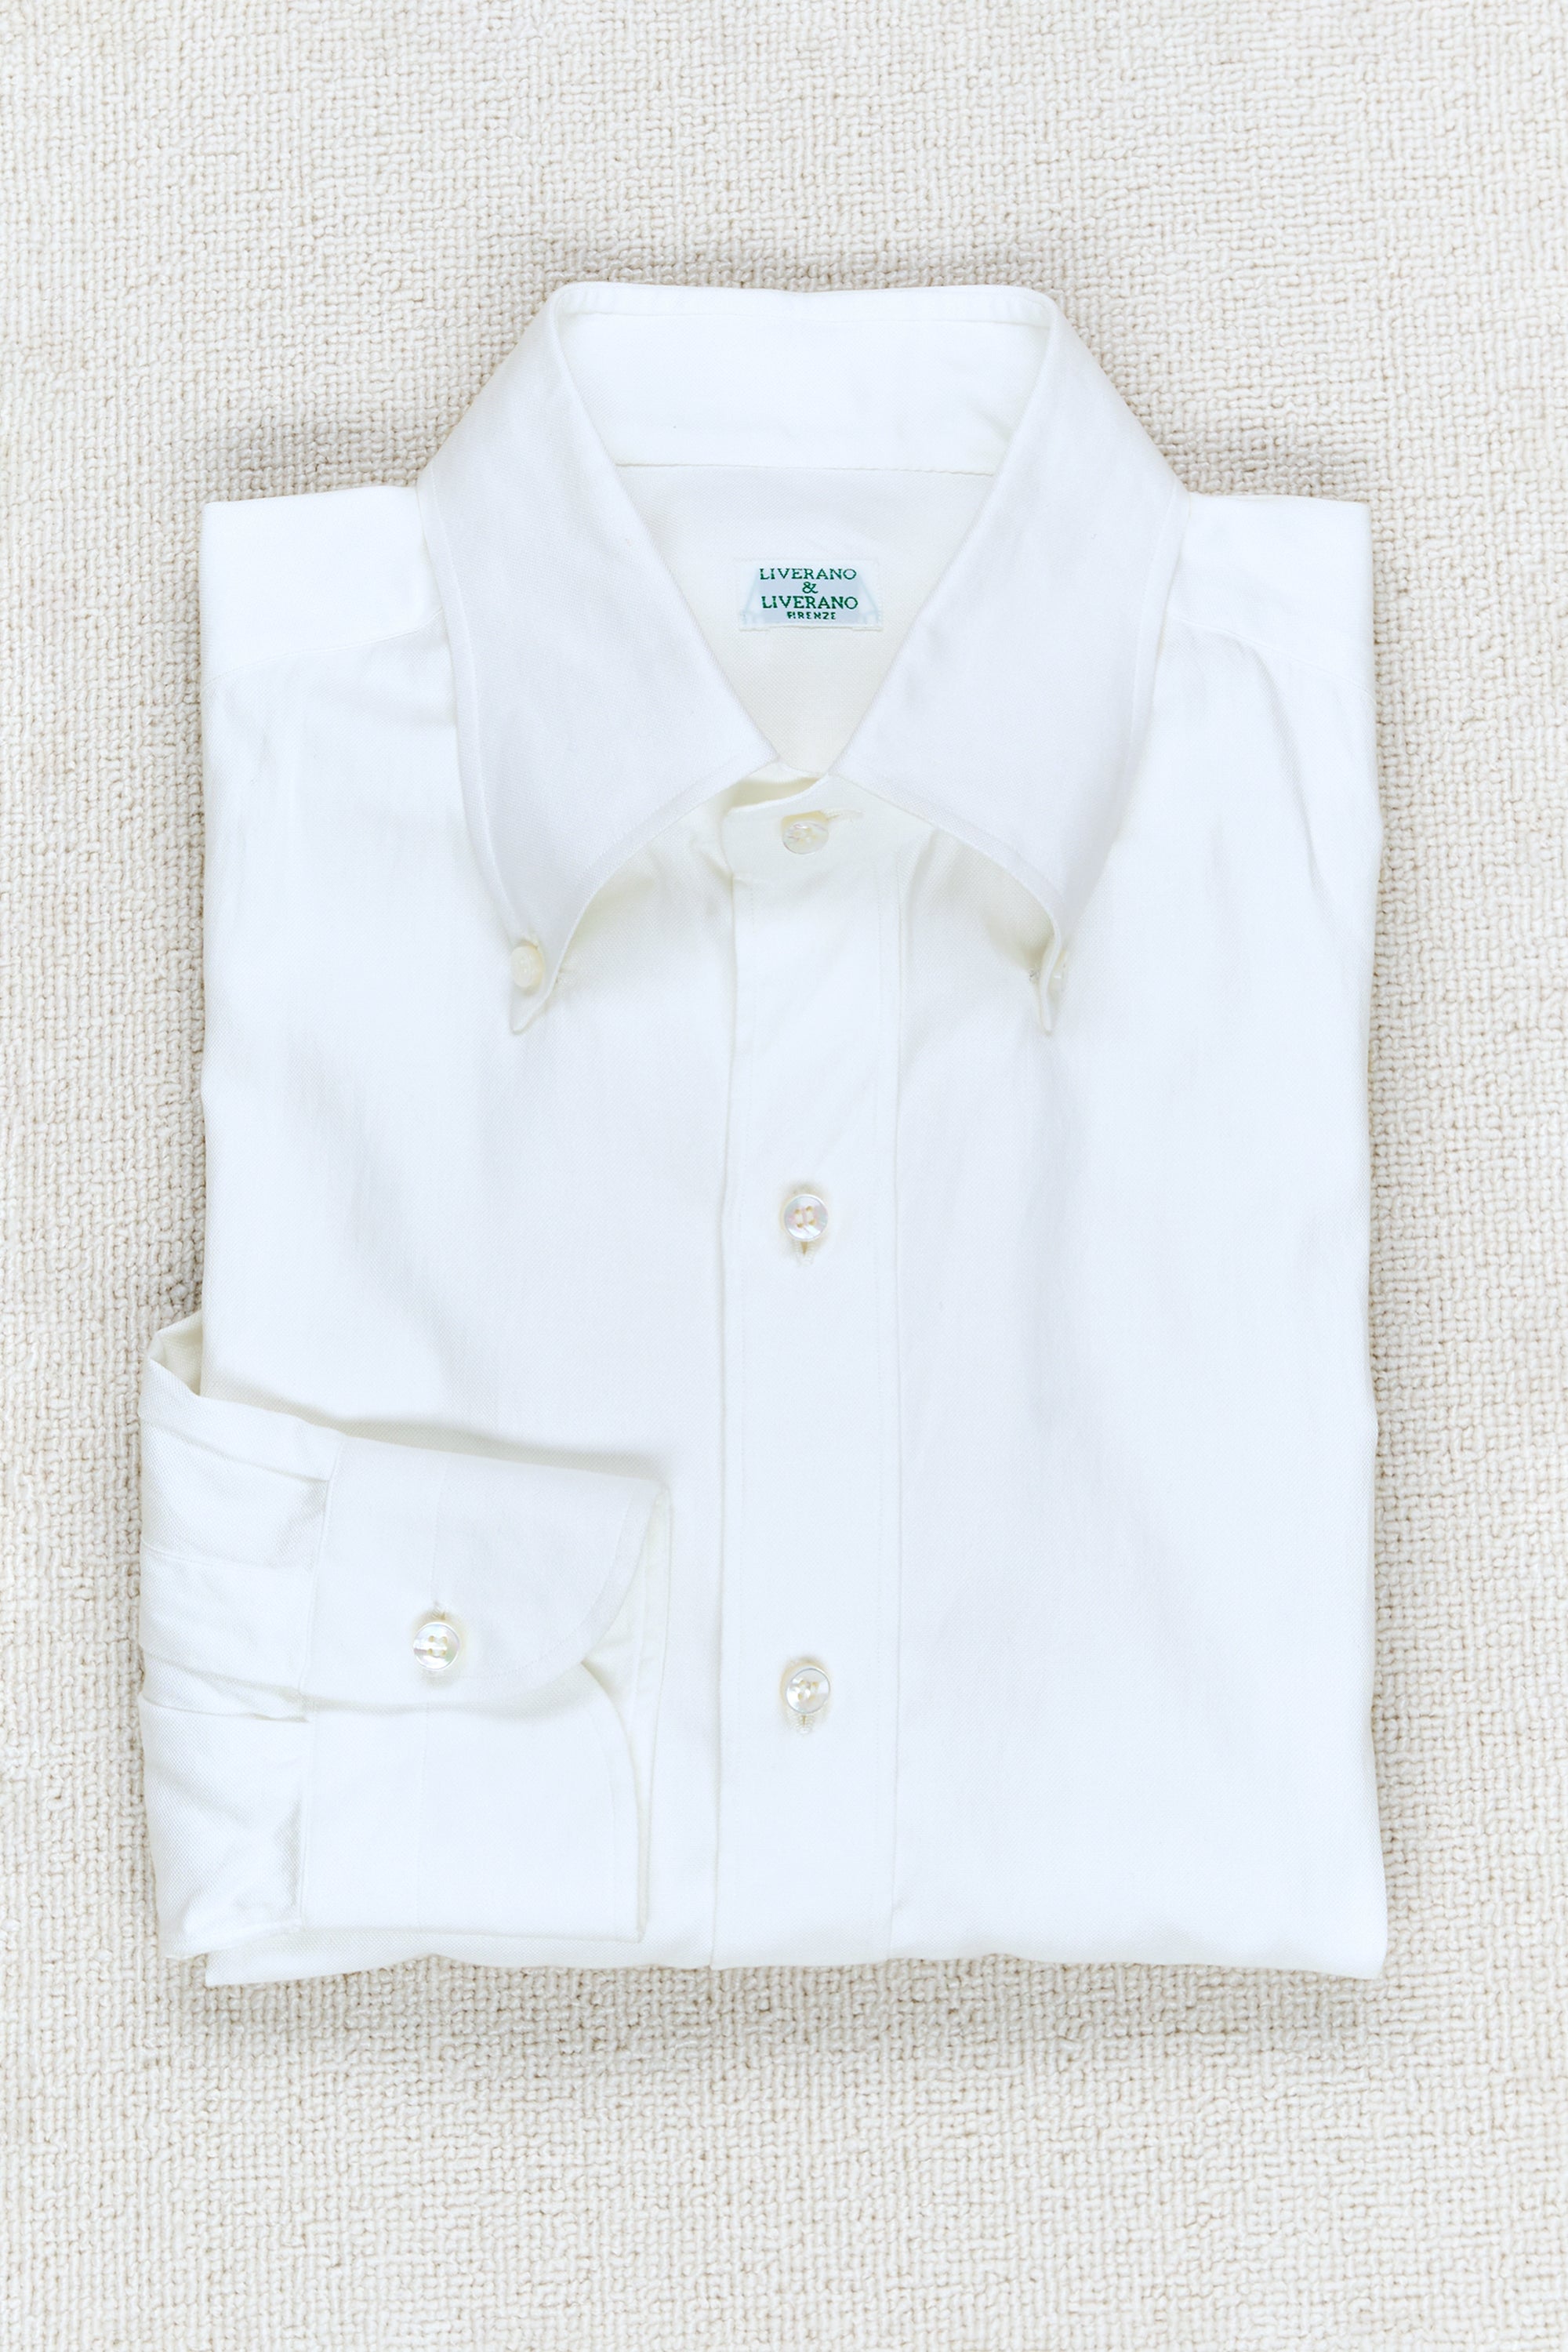 Liverano & Liverano AURORA White Cotton Button Down Shirt *sample*